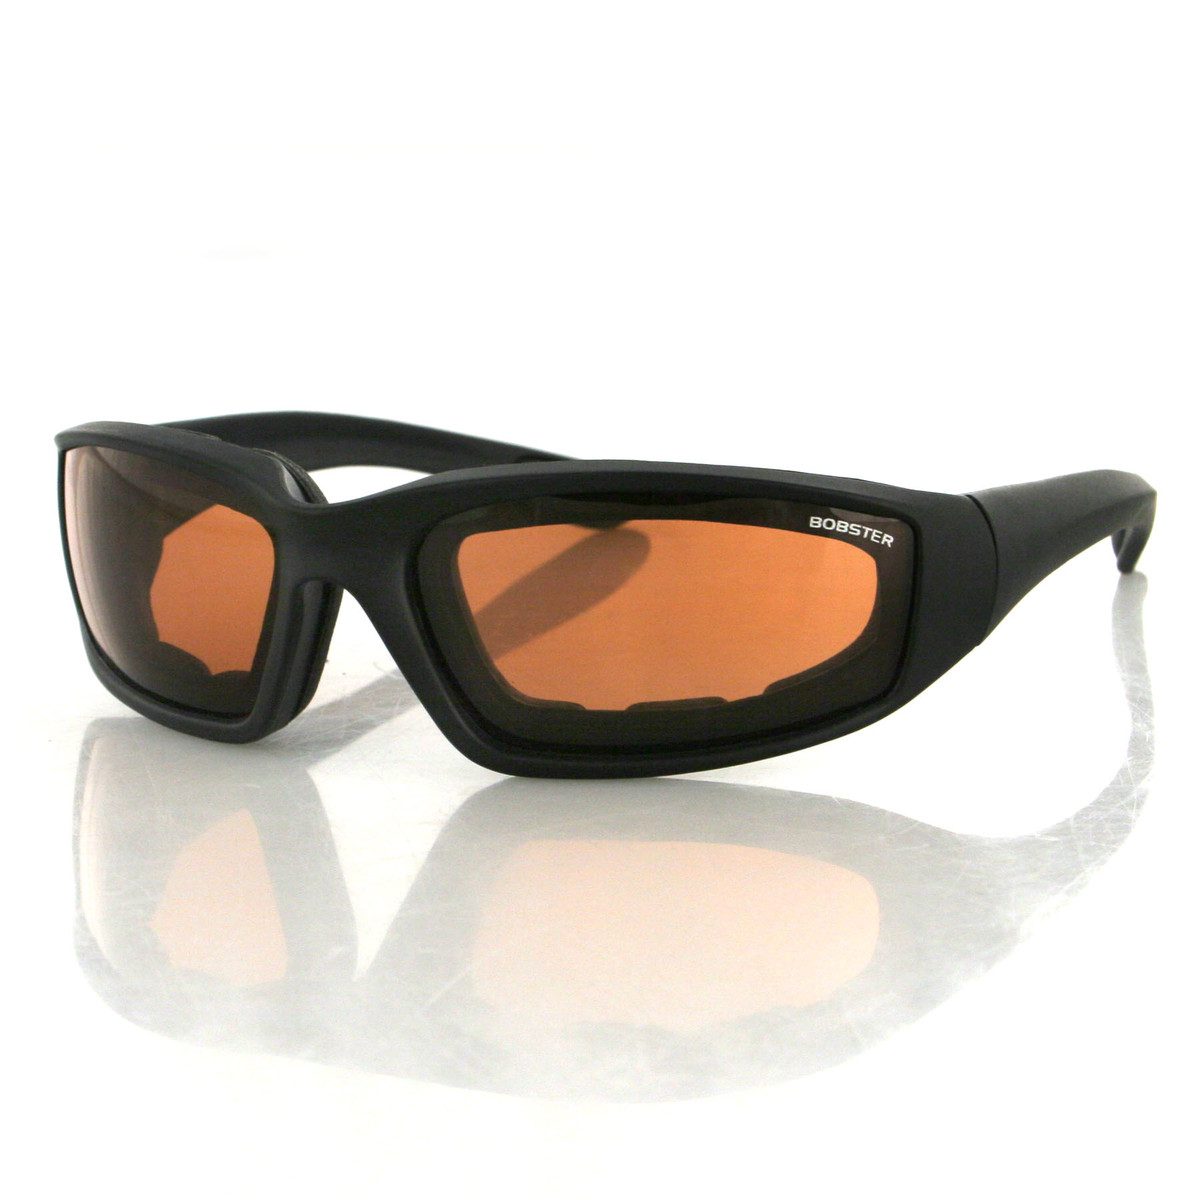 Bobster Foamerz 2 Wrap-Around Sunglasses - Amber